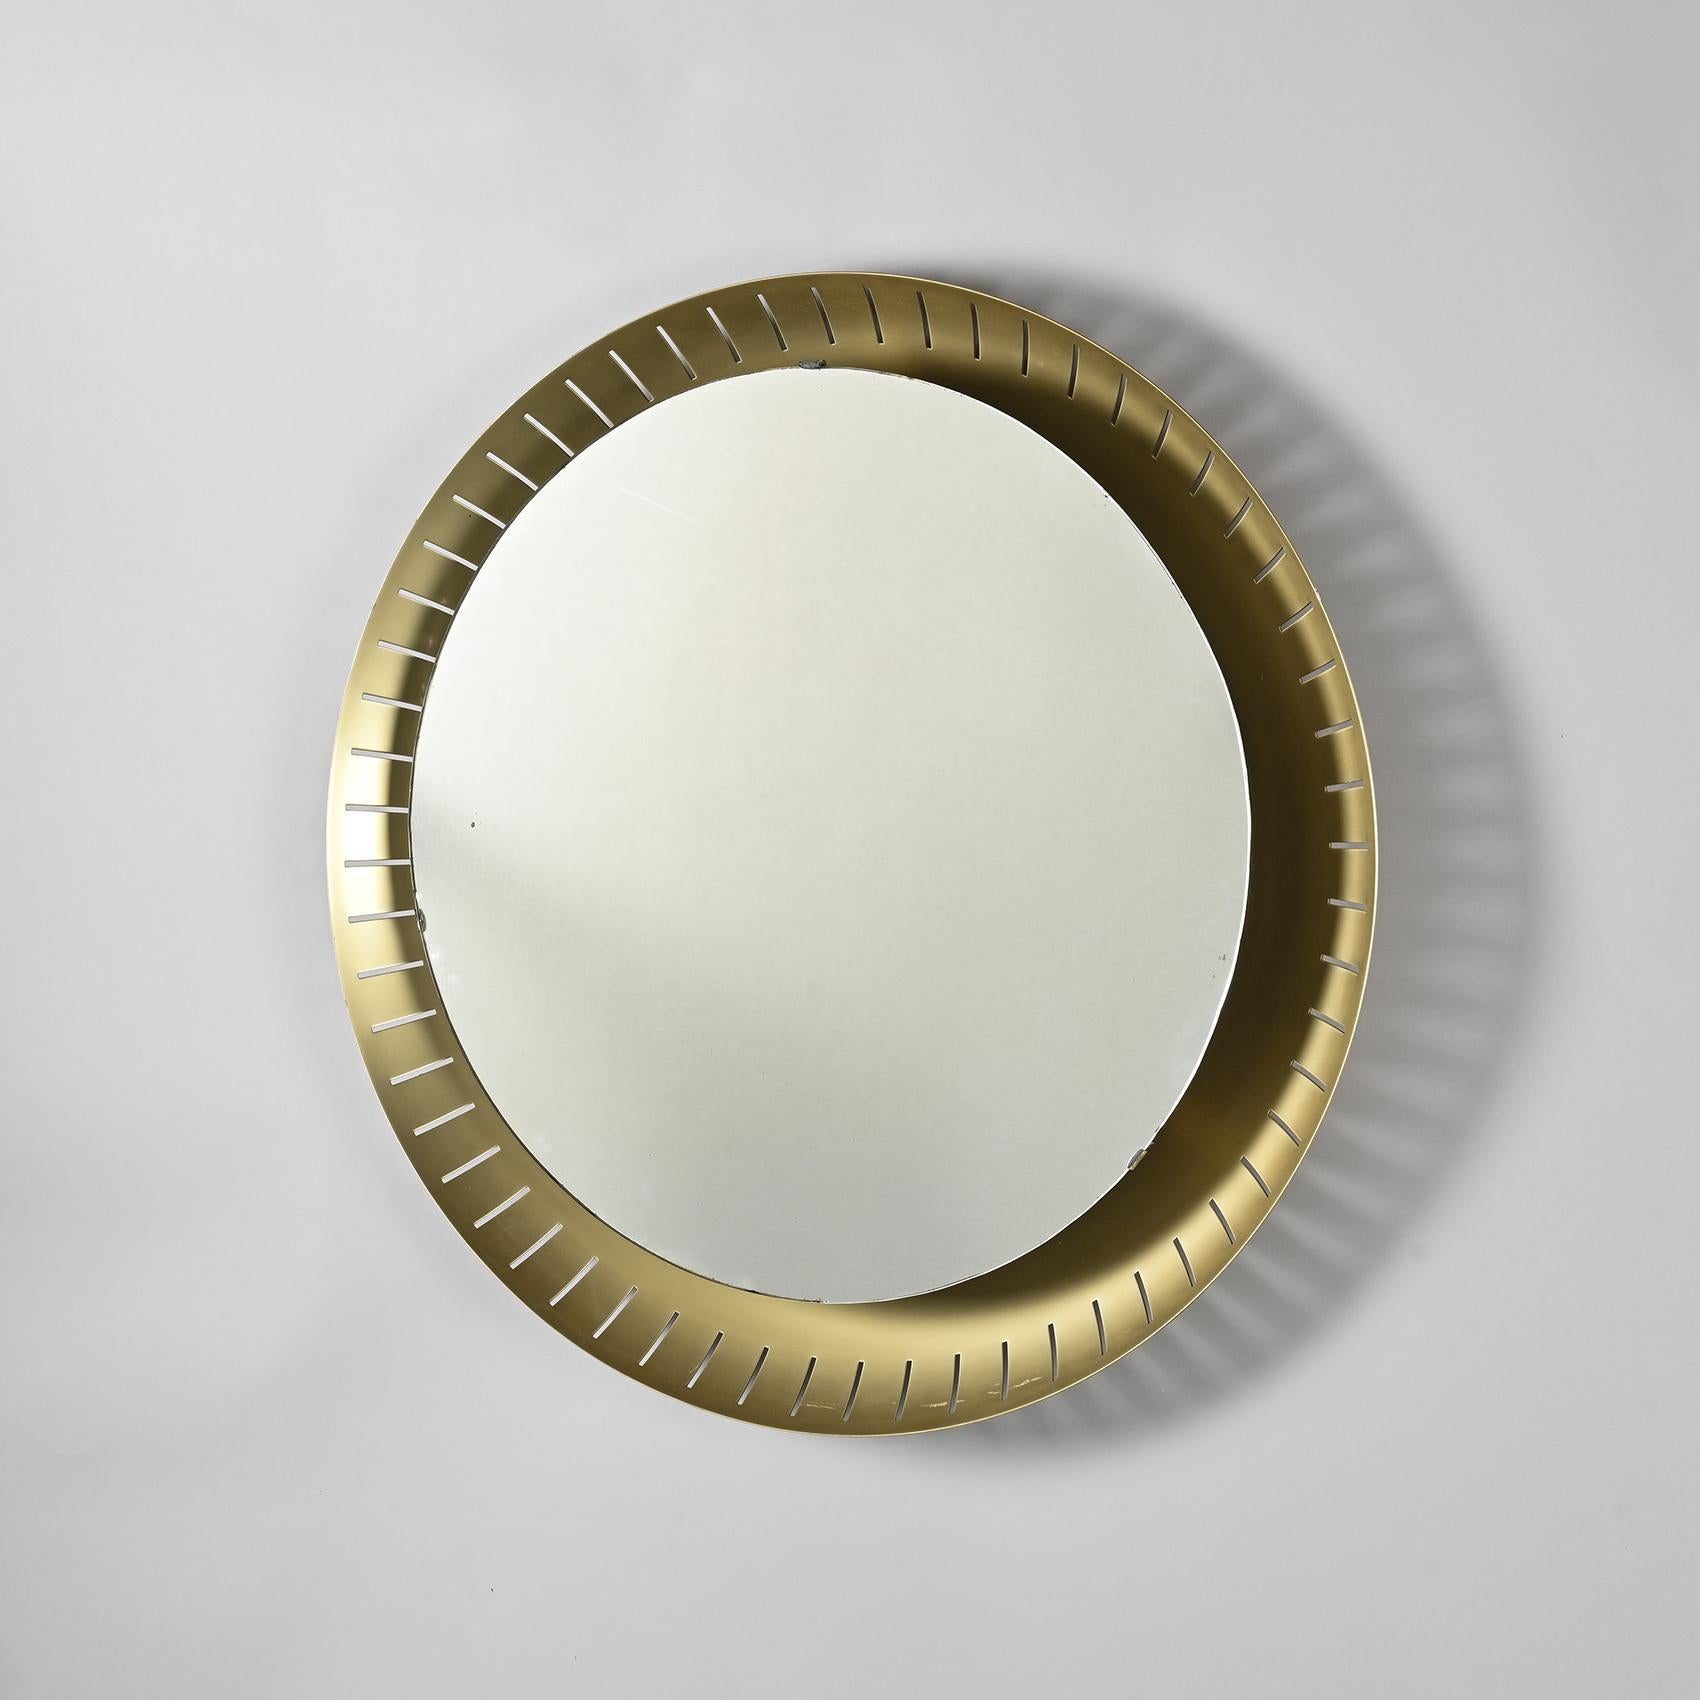 Retrolit Mirror by Stilnovo, Italy circa 1960 For Sale 2